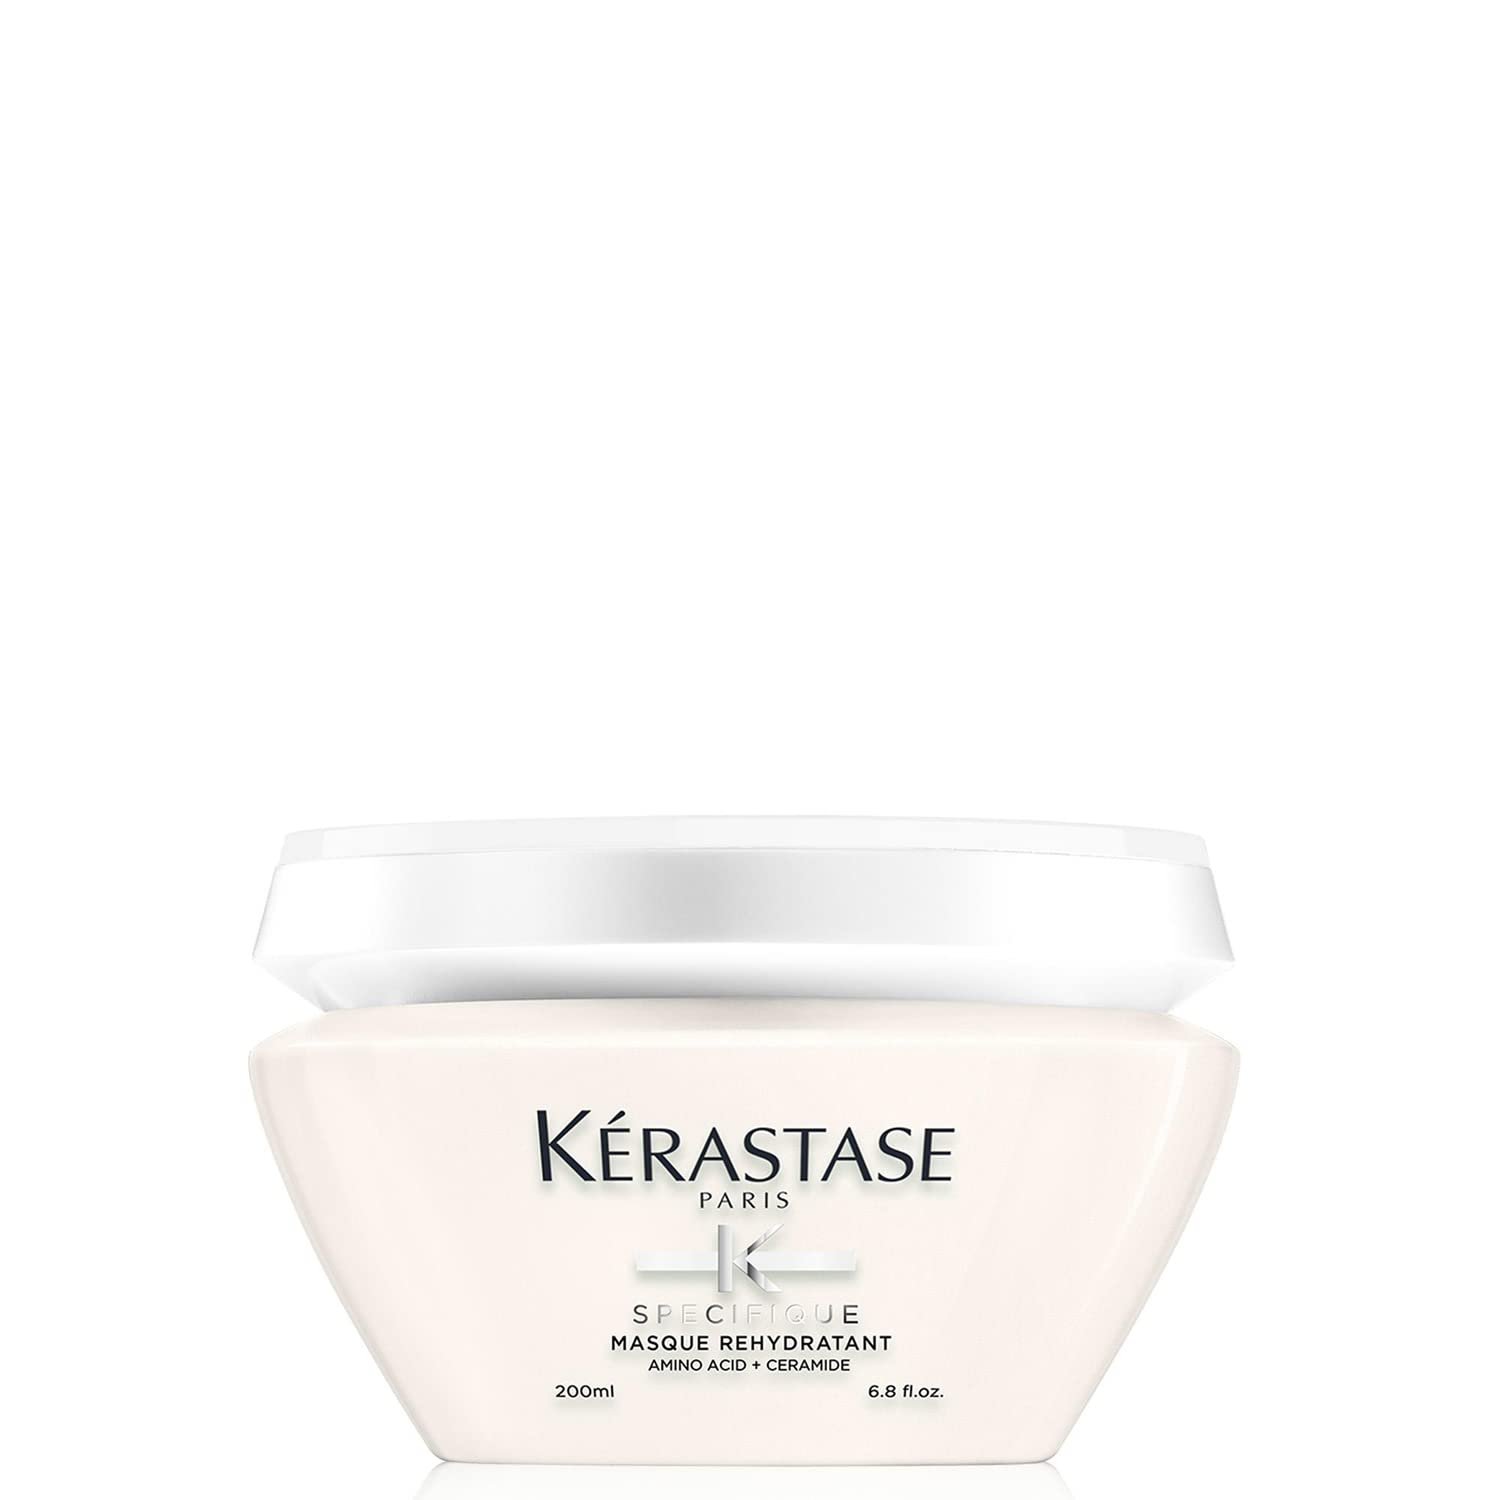 Loreal Professionnel Kérastase | Spécifique Divalent Hair Mask for Dry Lengths, Intensive Moisturising for More Shine and Suppleness, Masque Réhydrant, 200 ml